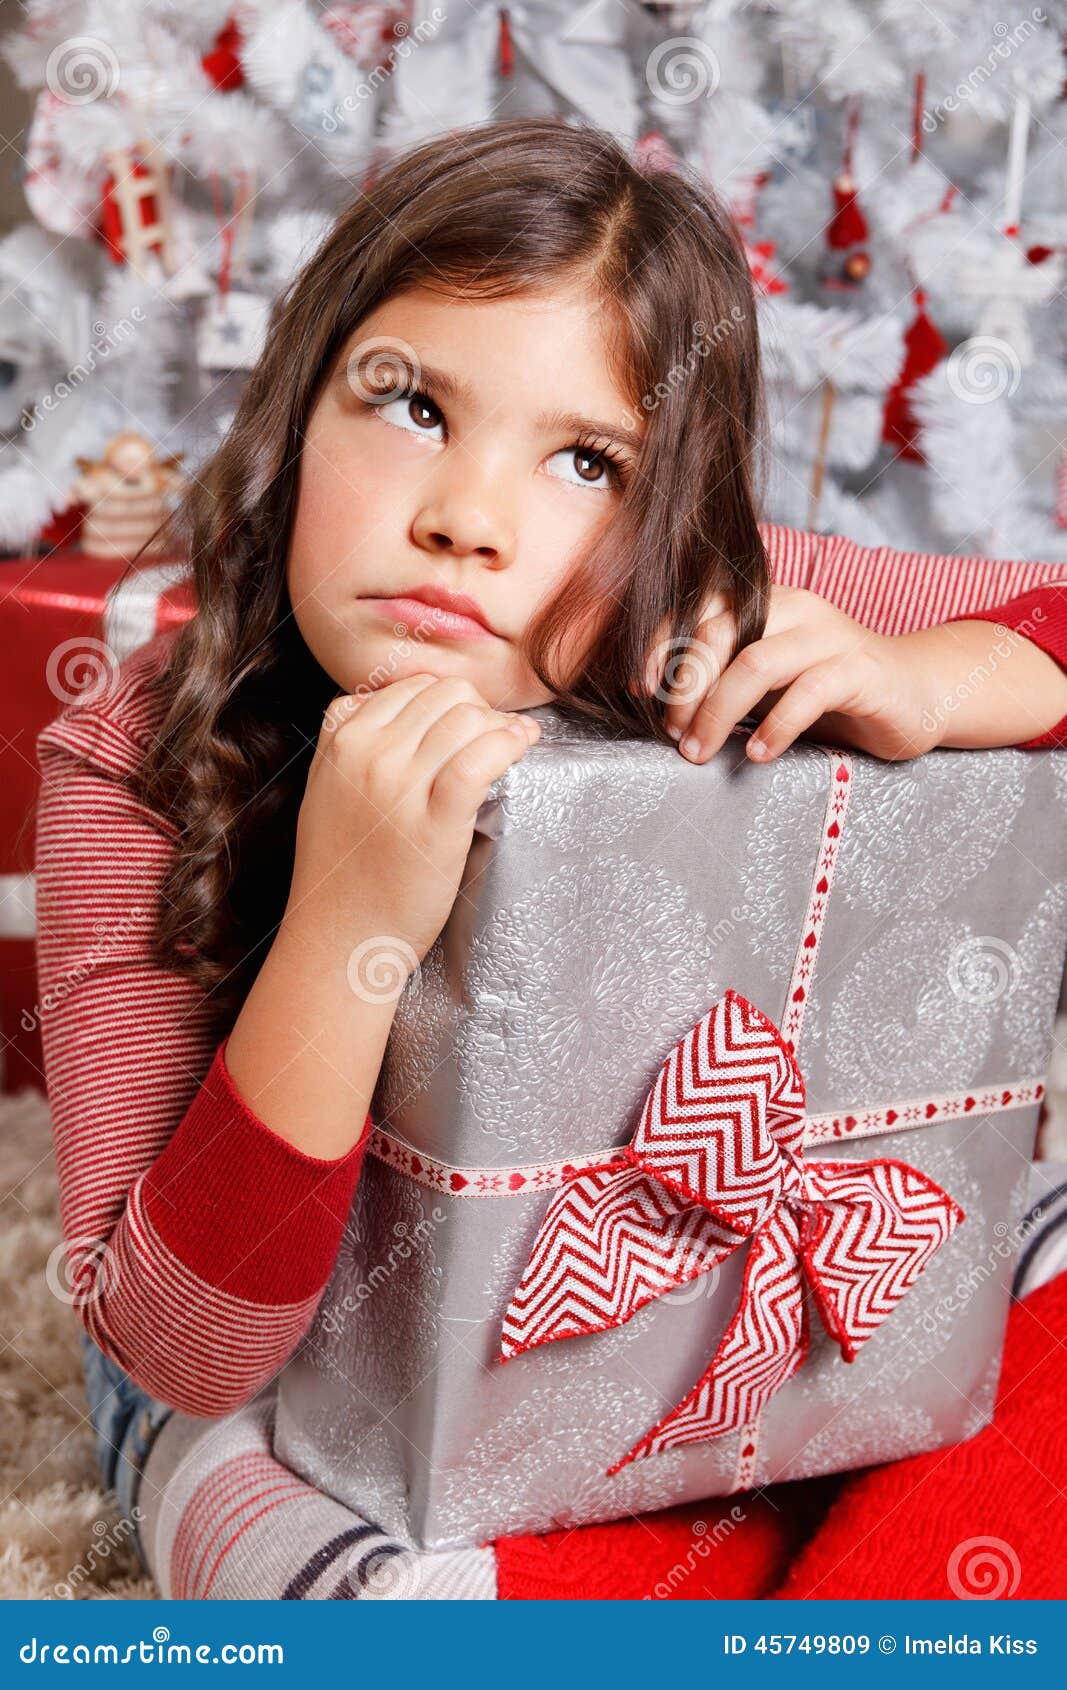 Portrait Of A Sad Little Girl At Christmas Stock Image - Image of closeup, festive: 45749809